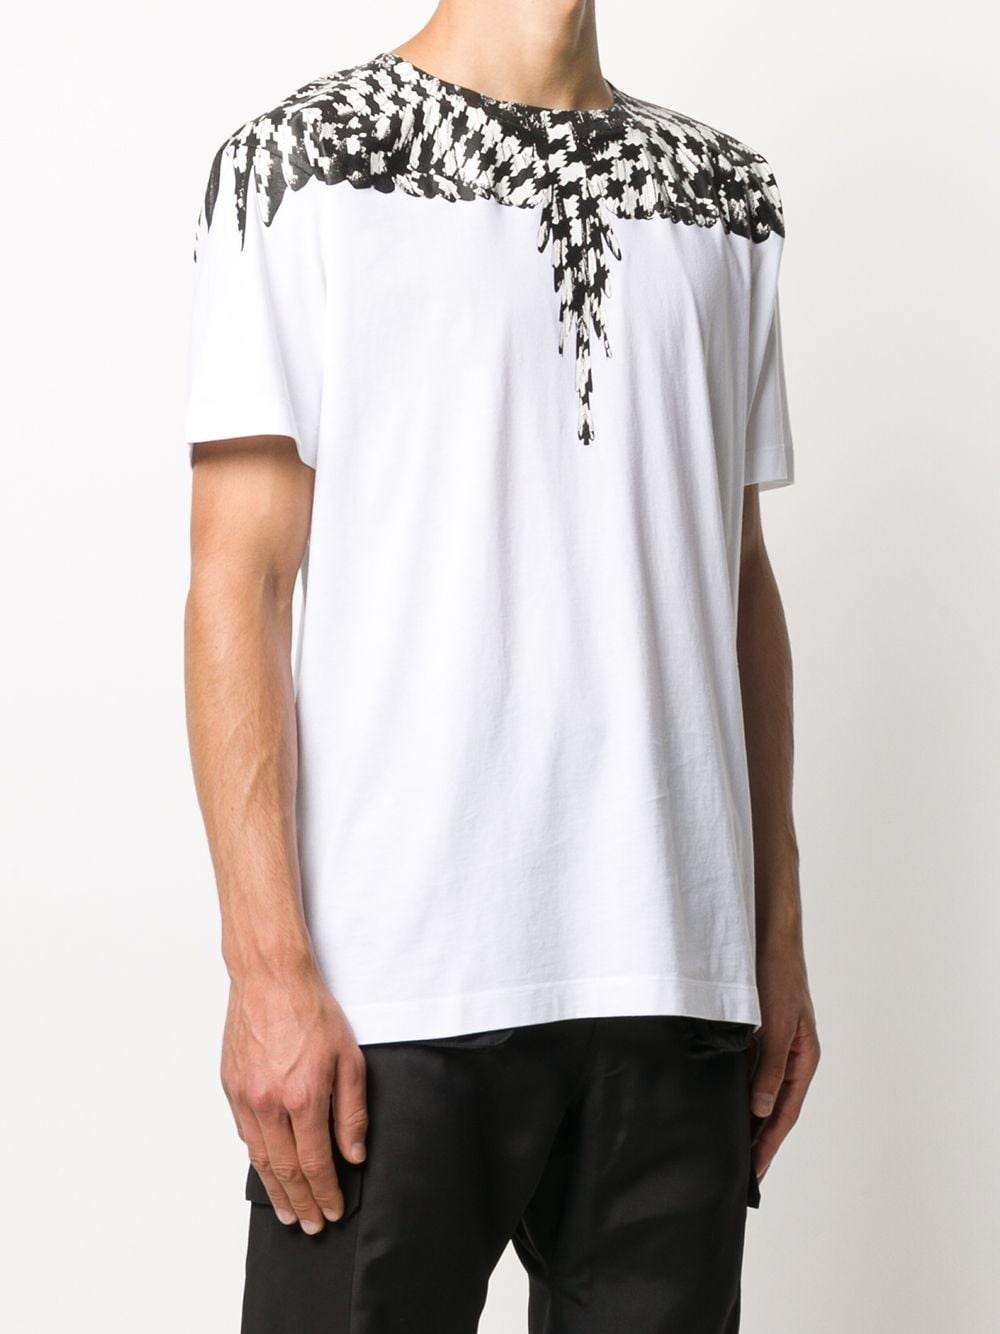 Marcelo Burlon Cotton Printed T-shirt in White for Men - Lyst